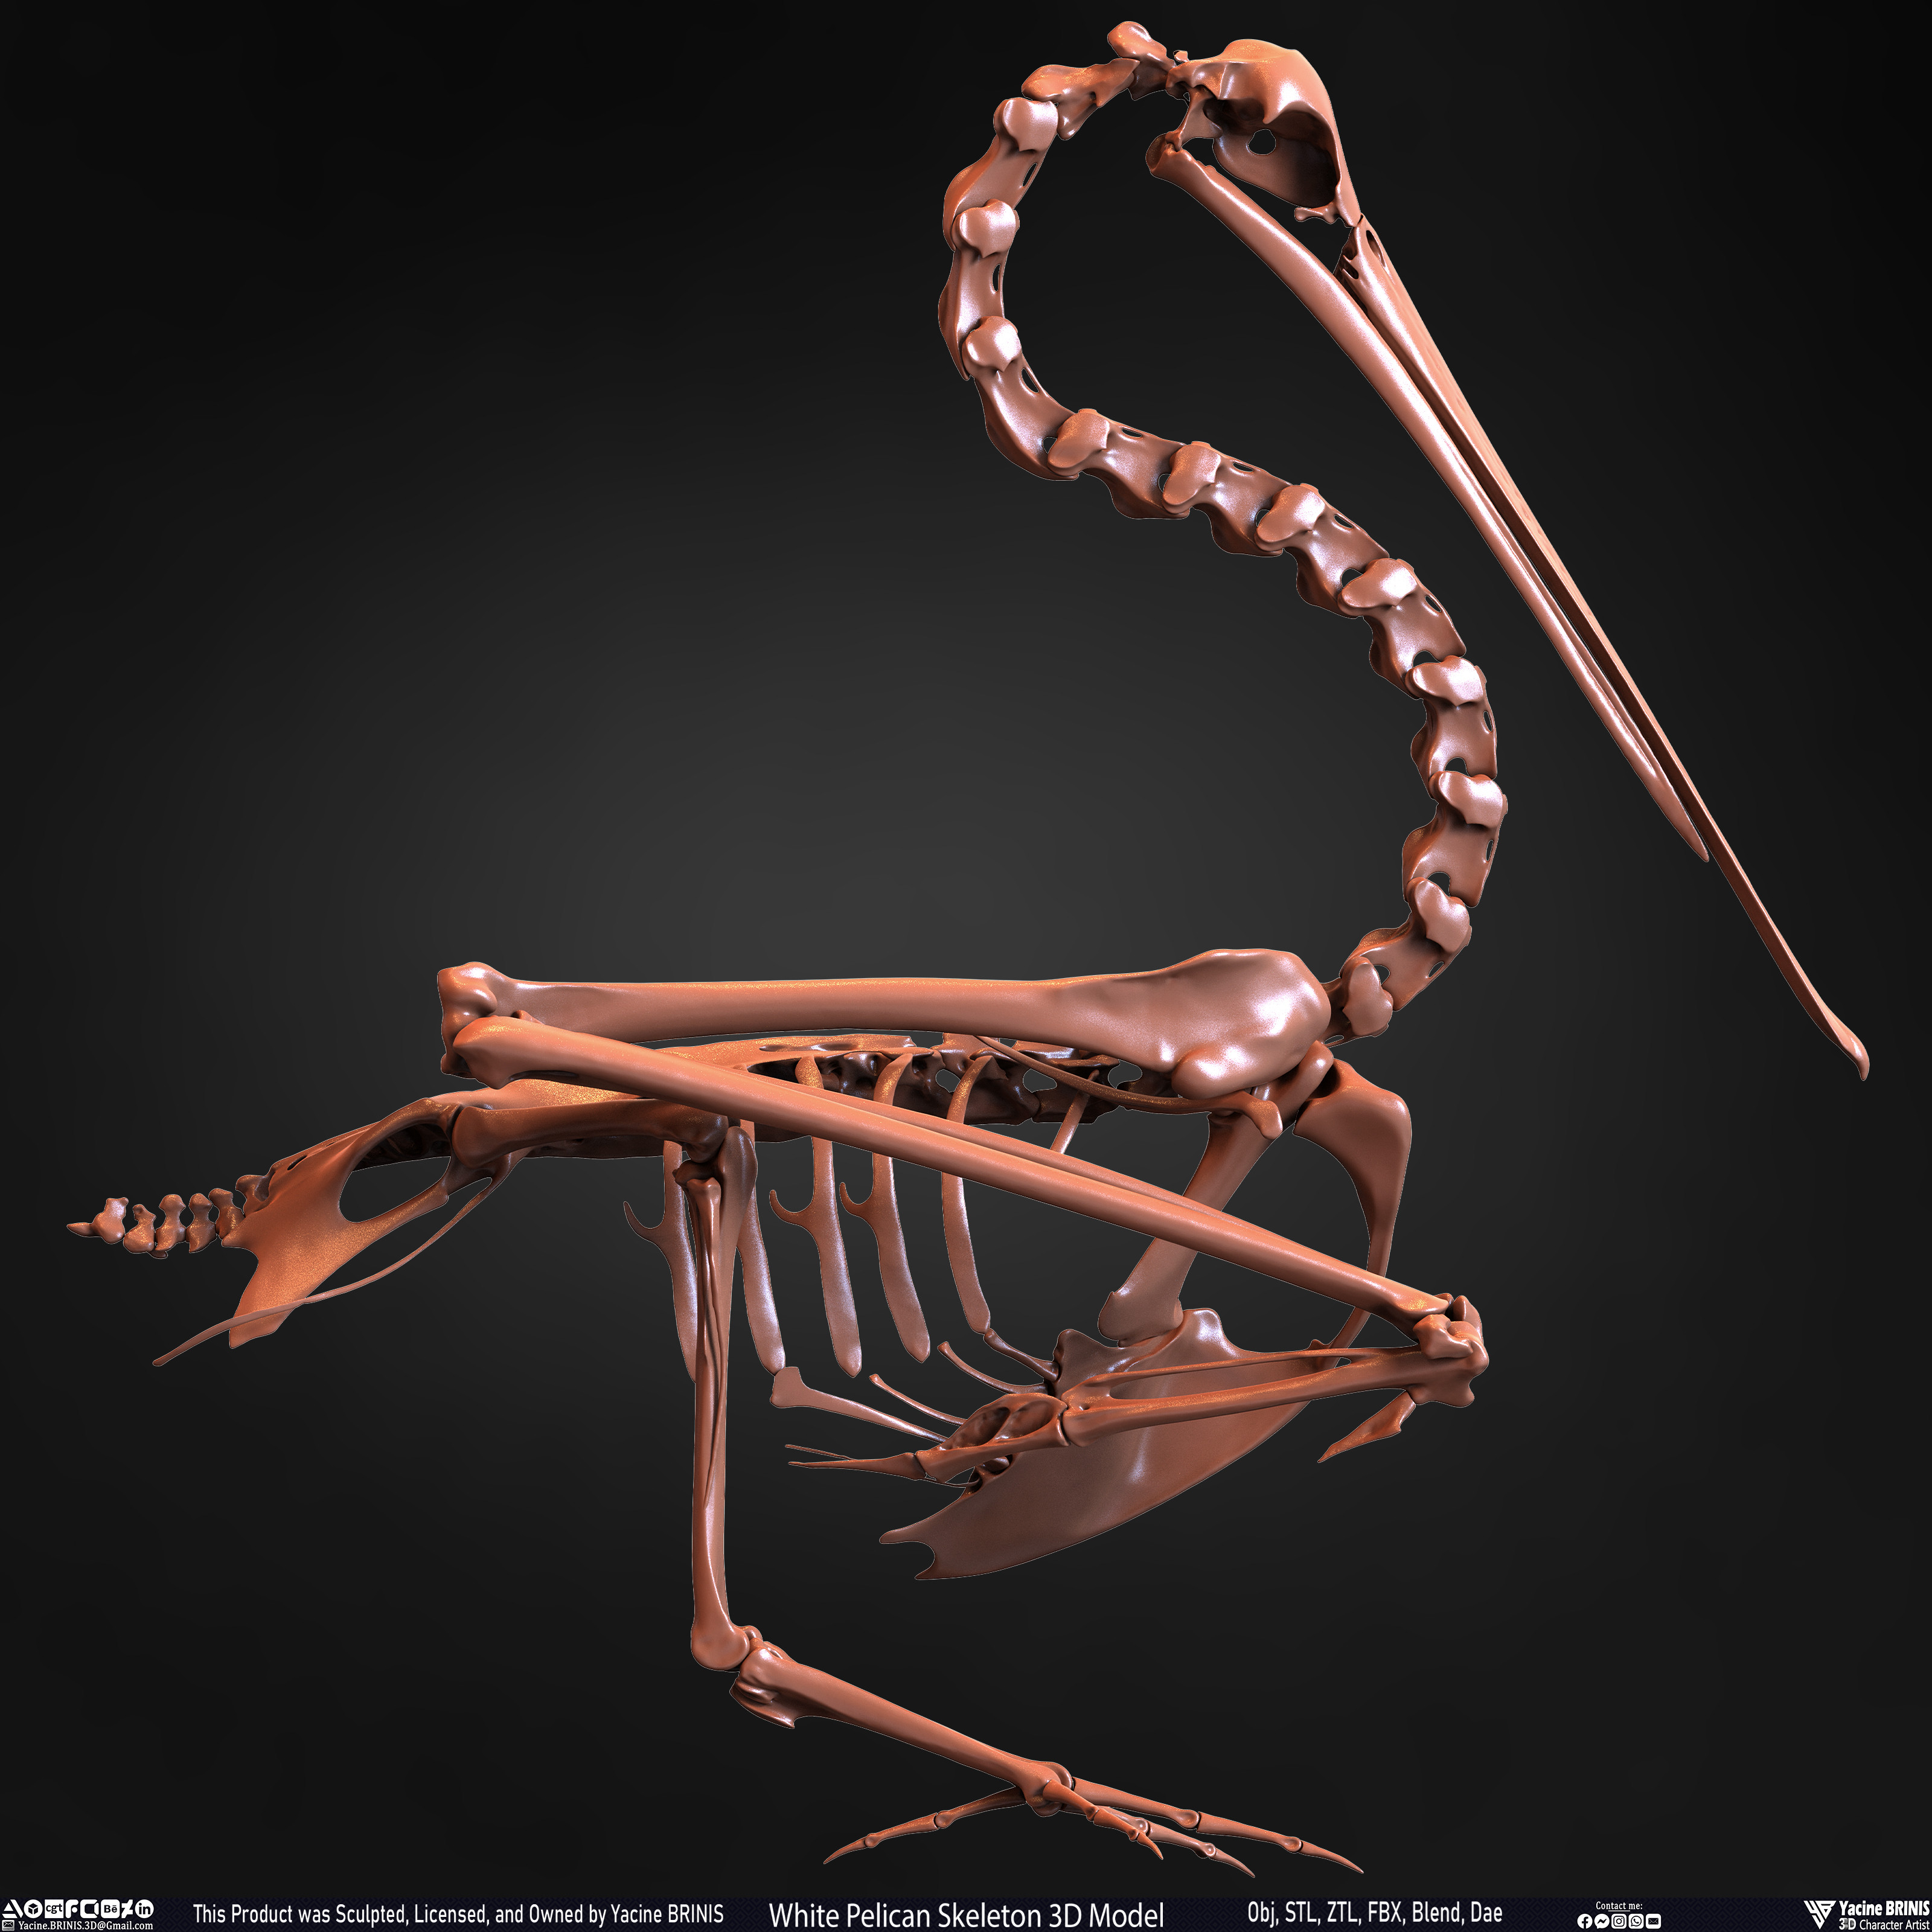 White Pelican Skeleton 3D Model Sculpted by Yacine BRINIS Set 016